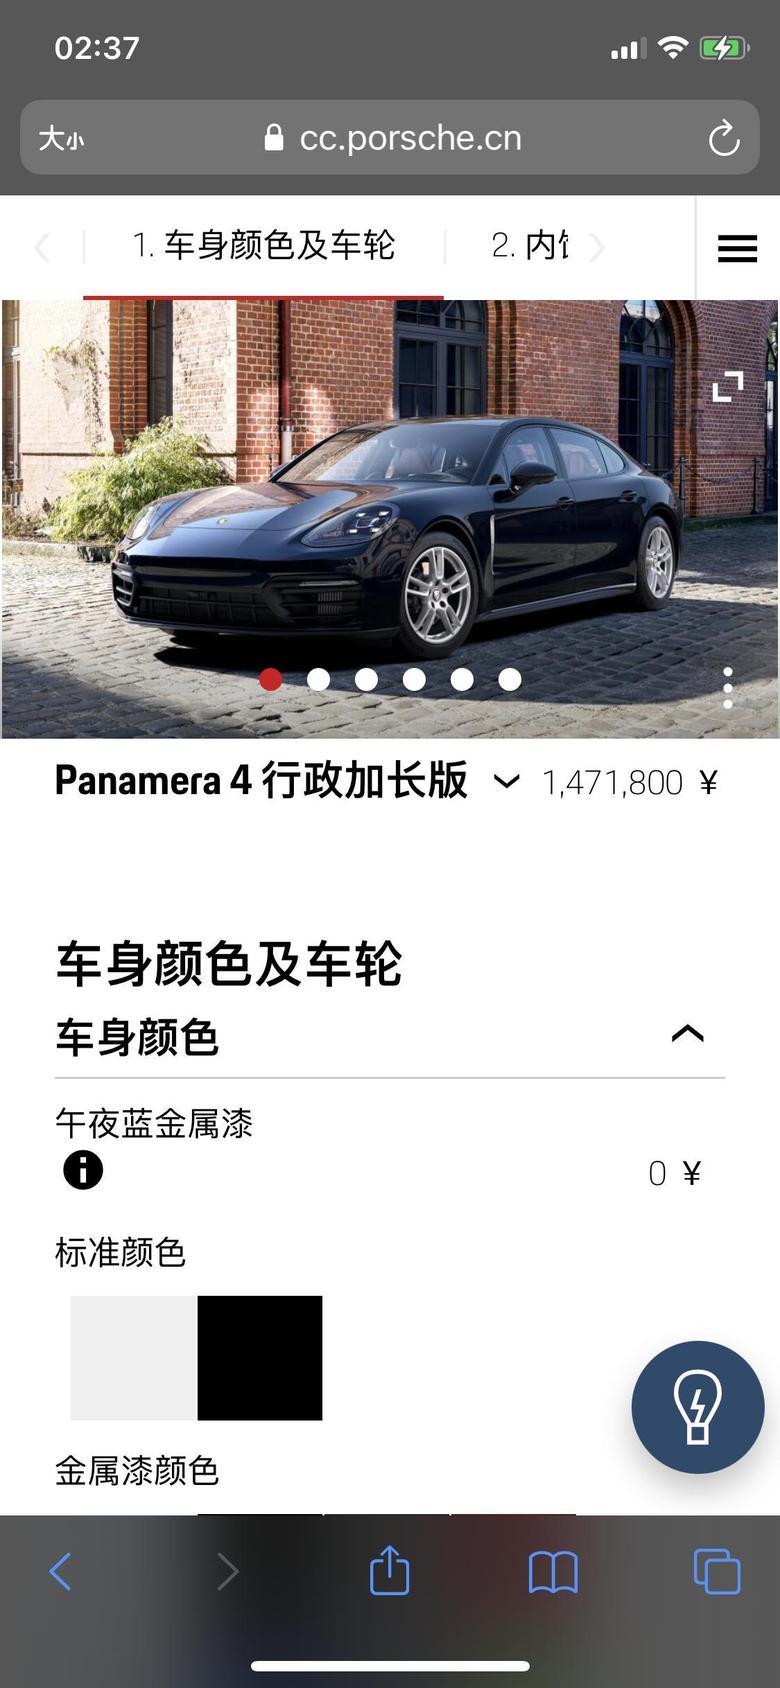 panamera 卧槽，选完之后147.18万，刚好超过146万，要交豪车税怎么办？